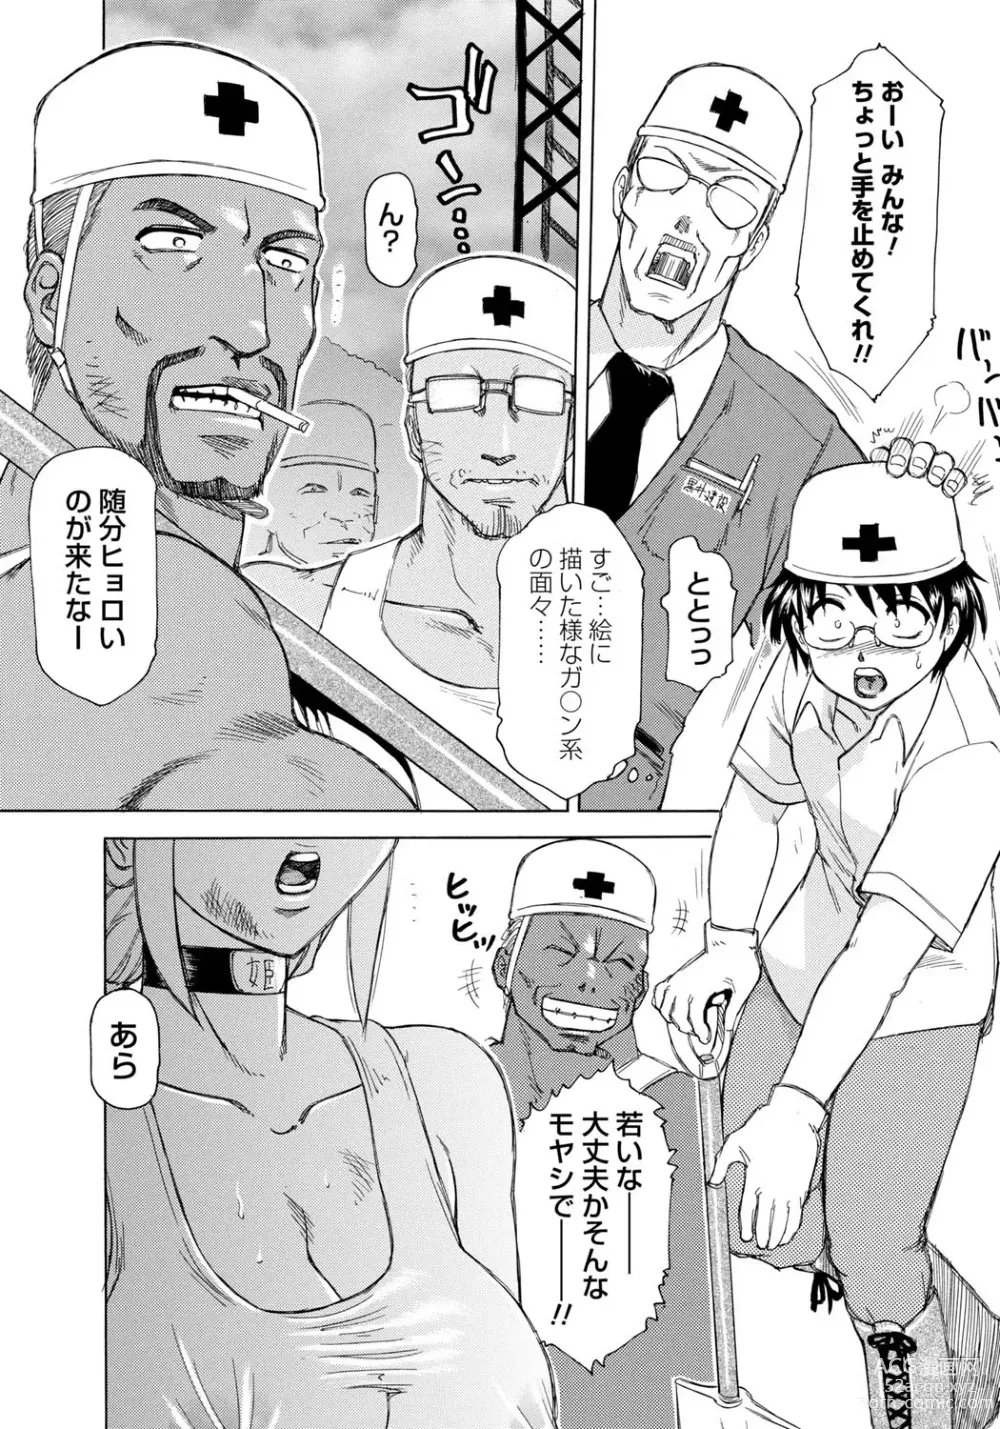 Page 5 of manga Inen Gangu Hime Naburi